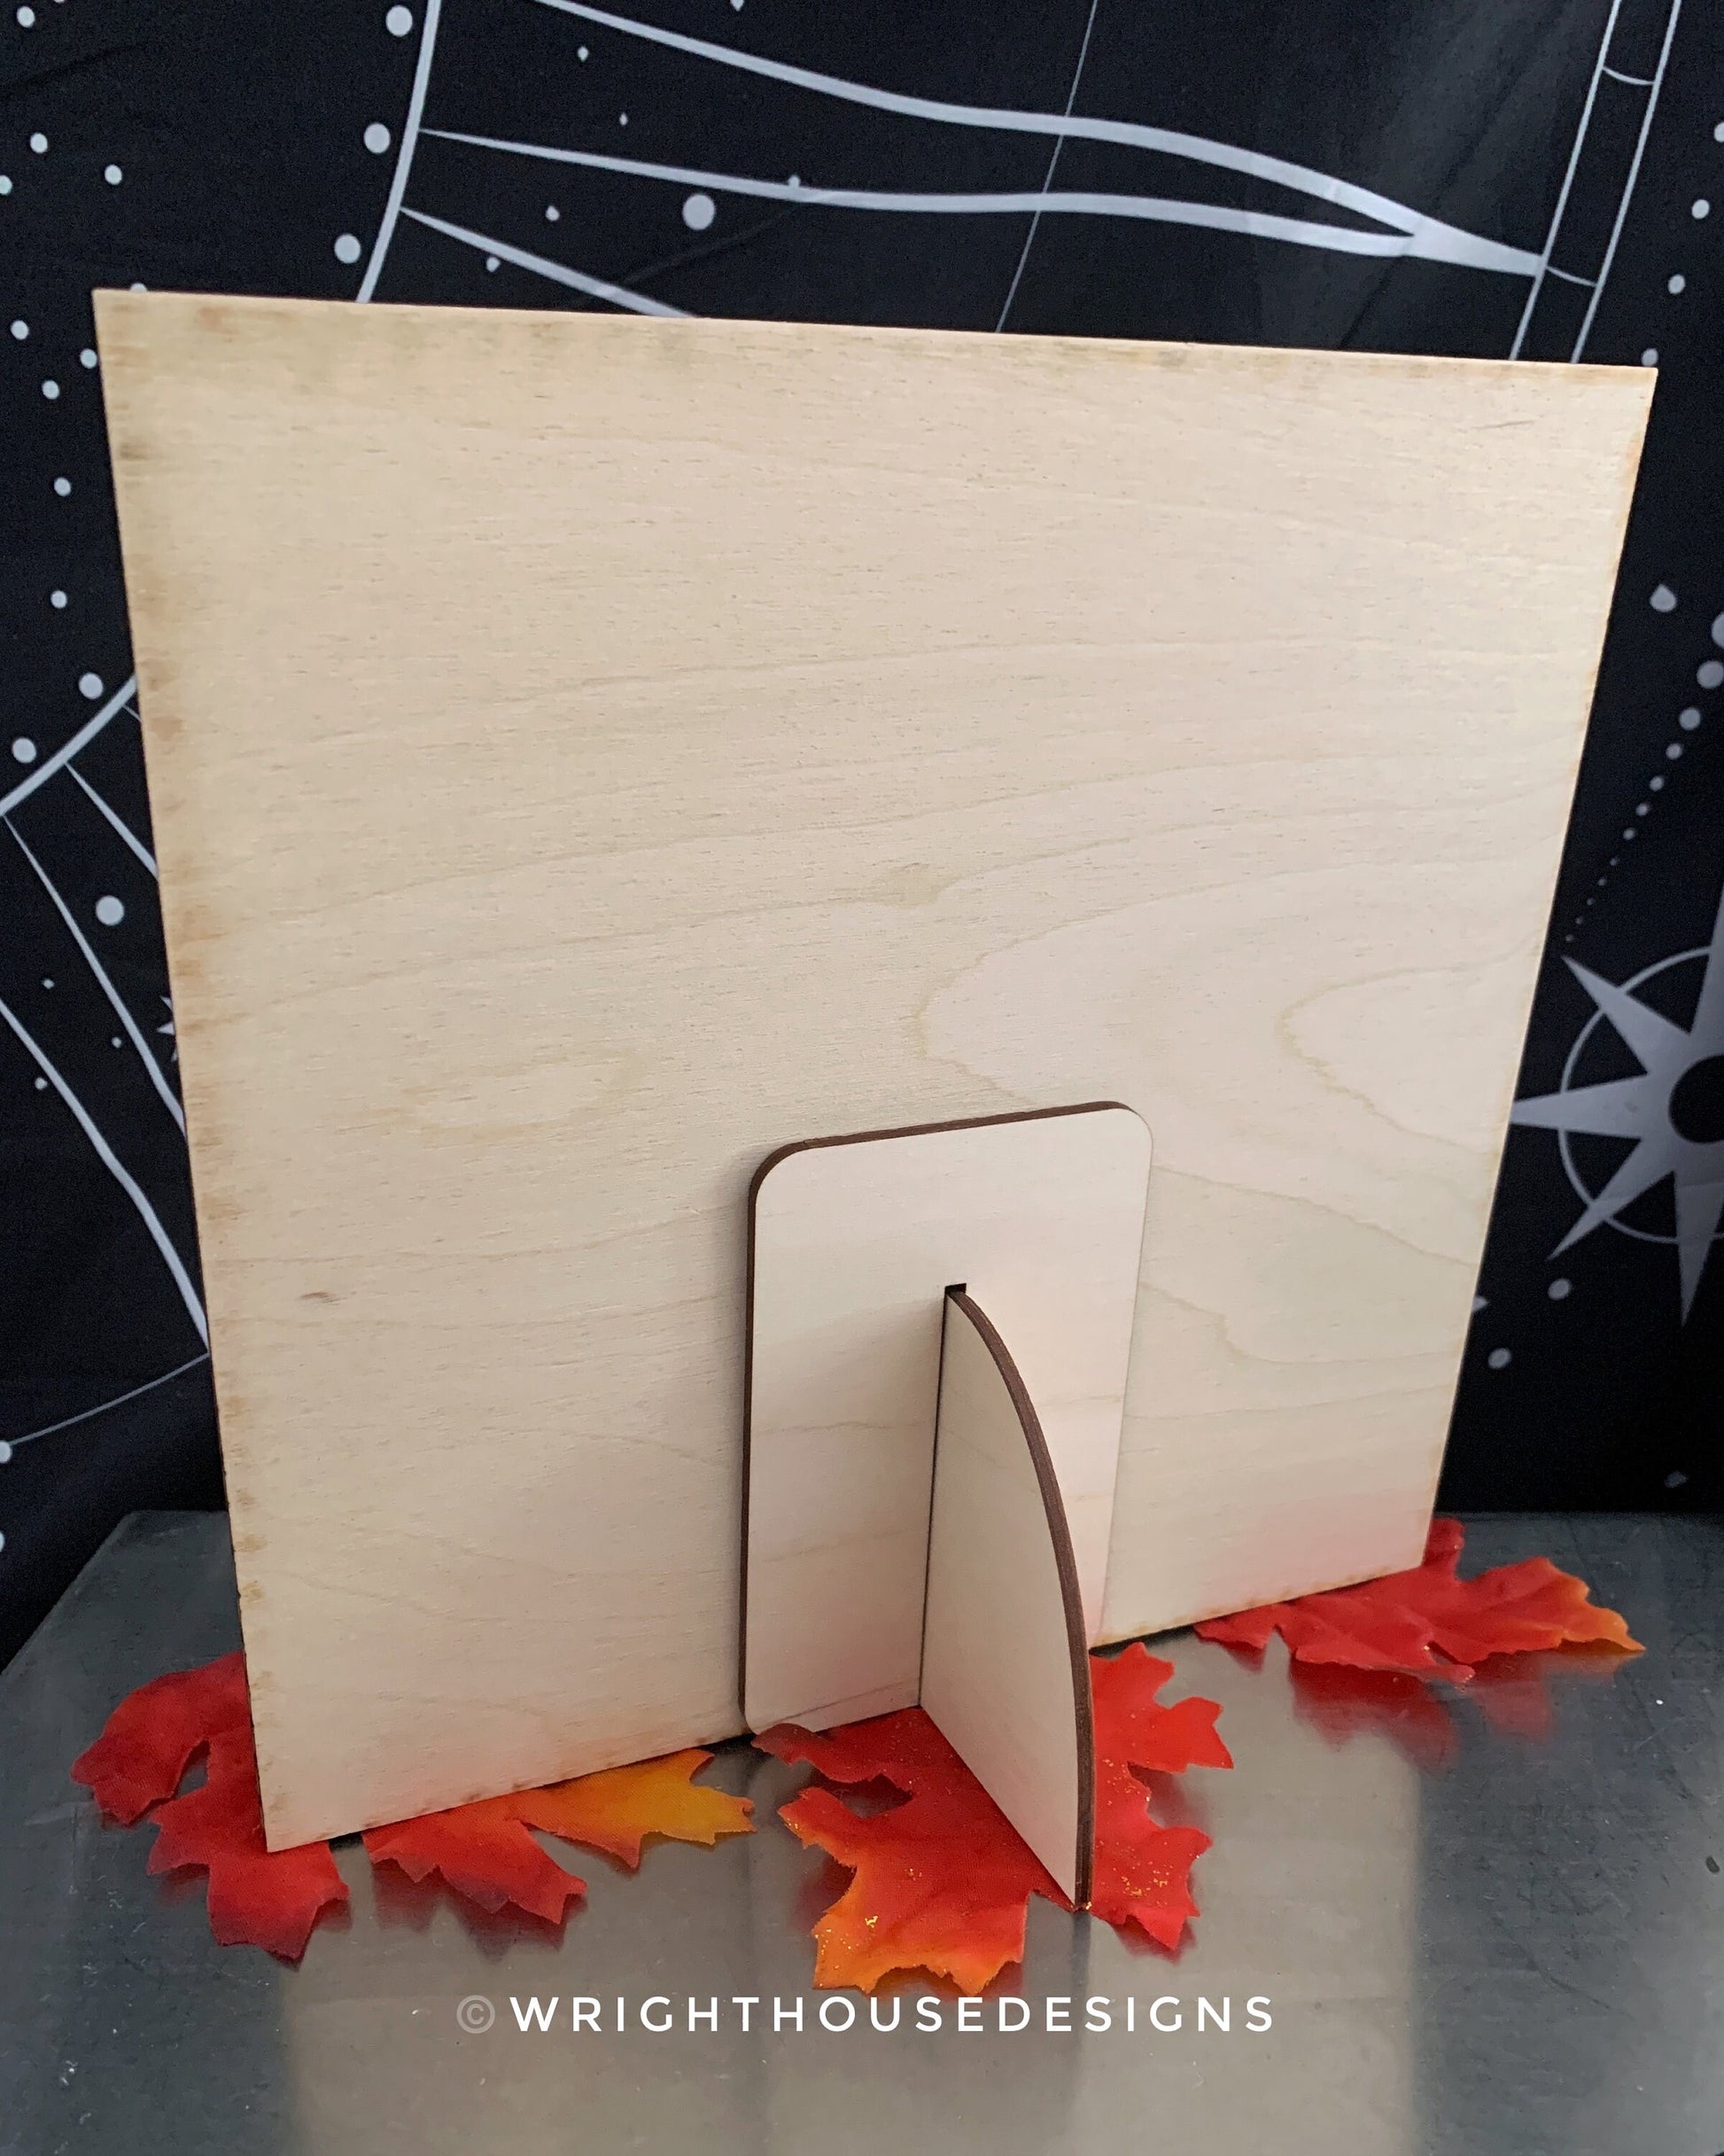 Autumn Mason Jar Candle Farmhouse Frame Sign Bundle - Tiered Tray Decor and DIY Kits - Cut File For Glowforge Lasers - Digital SVG File